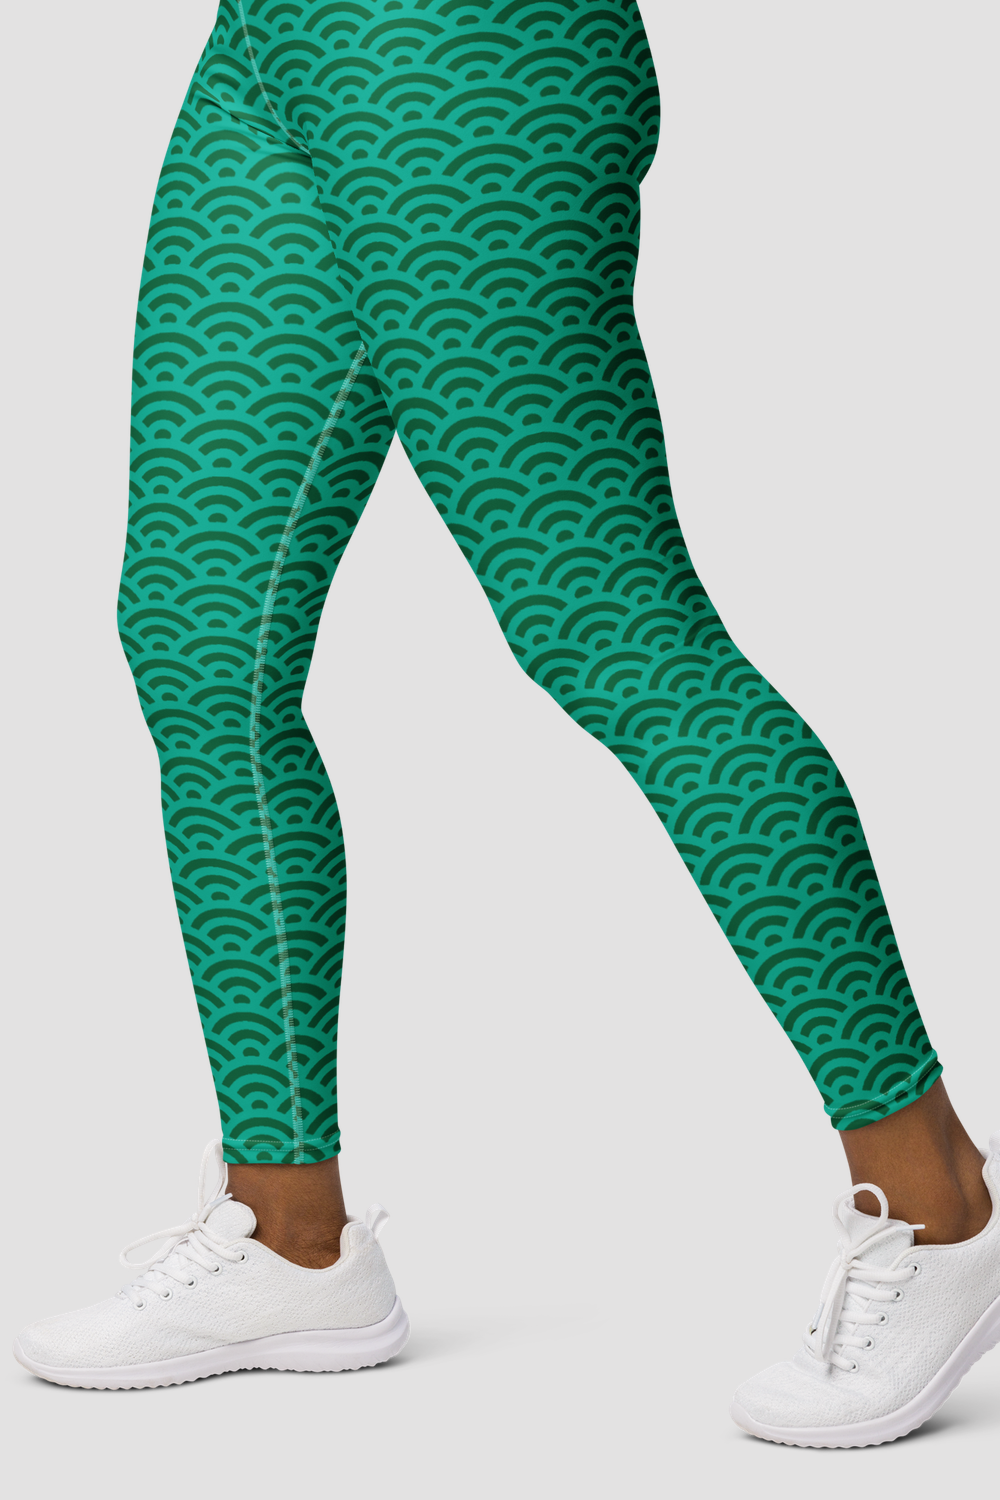 Pyandonean Sea Serpent Graphic Print Pattern Women's High Waist Yoga Leggings